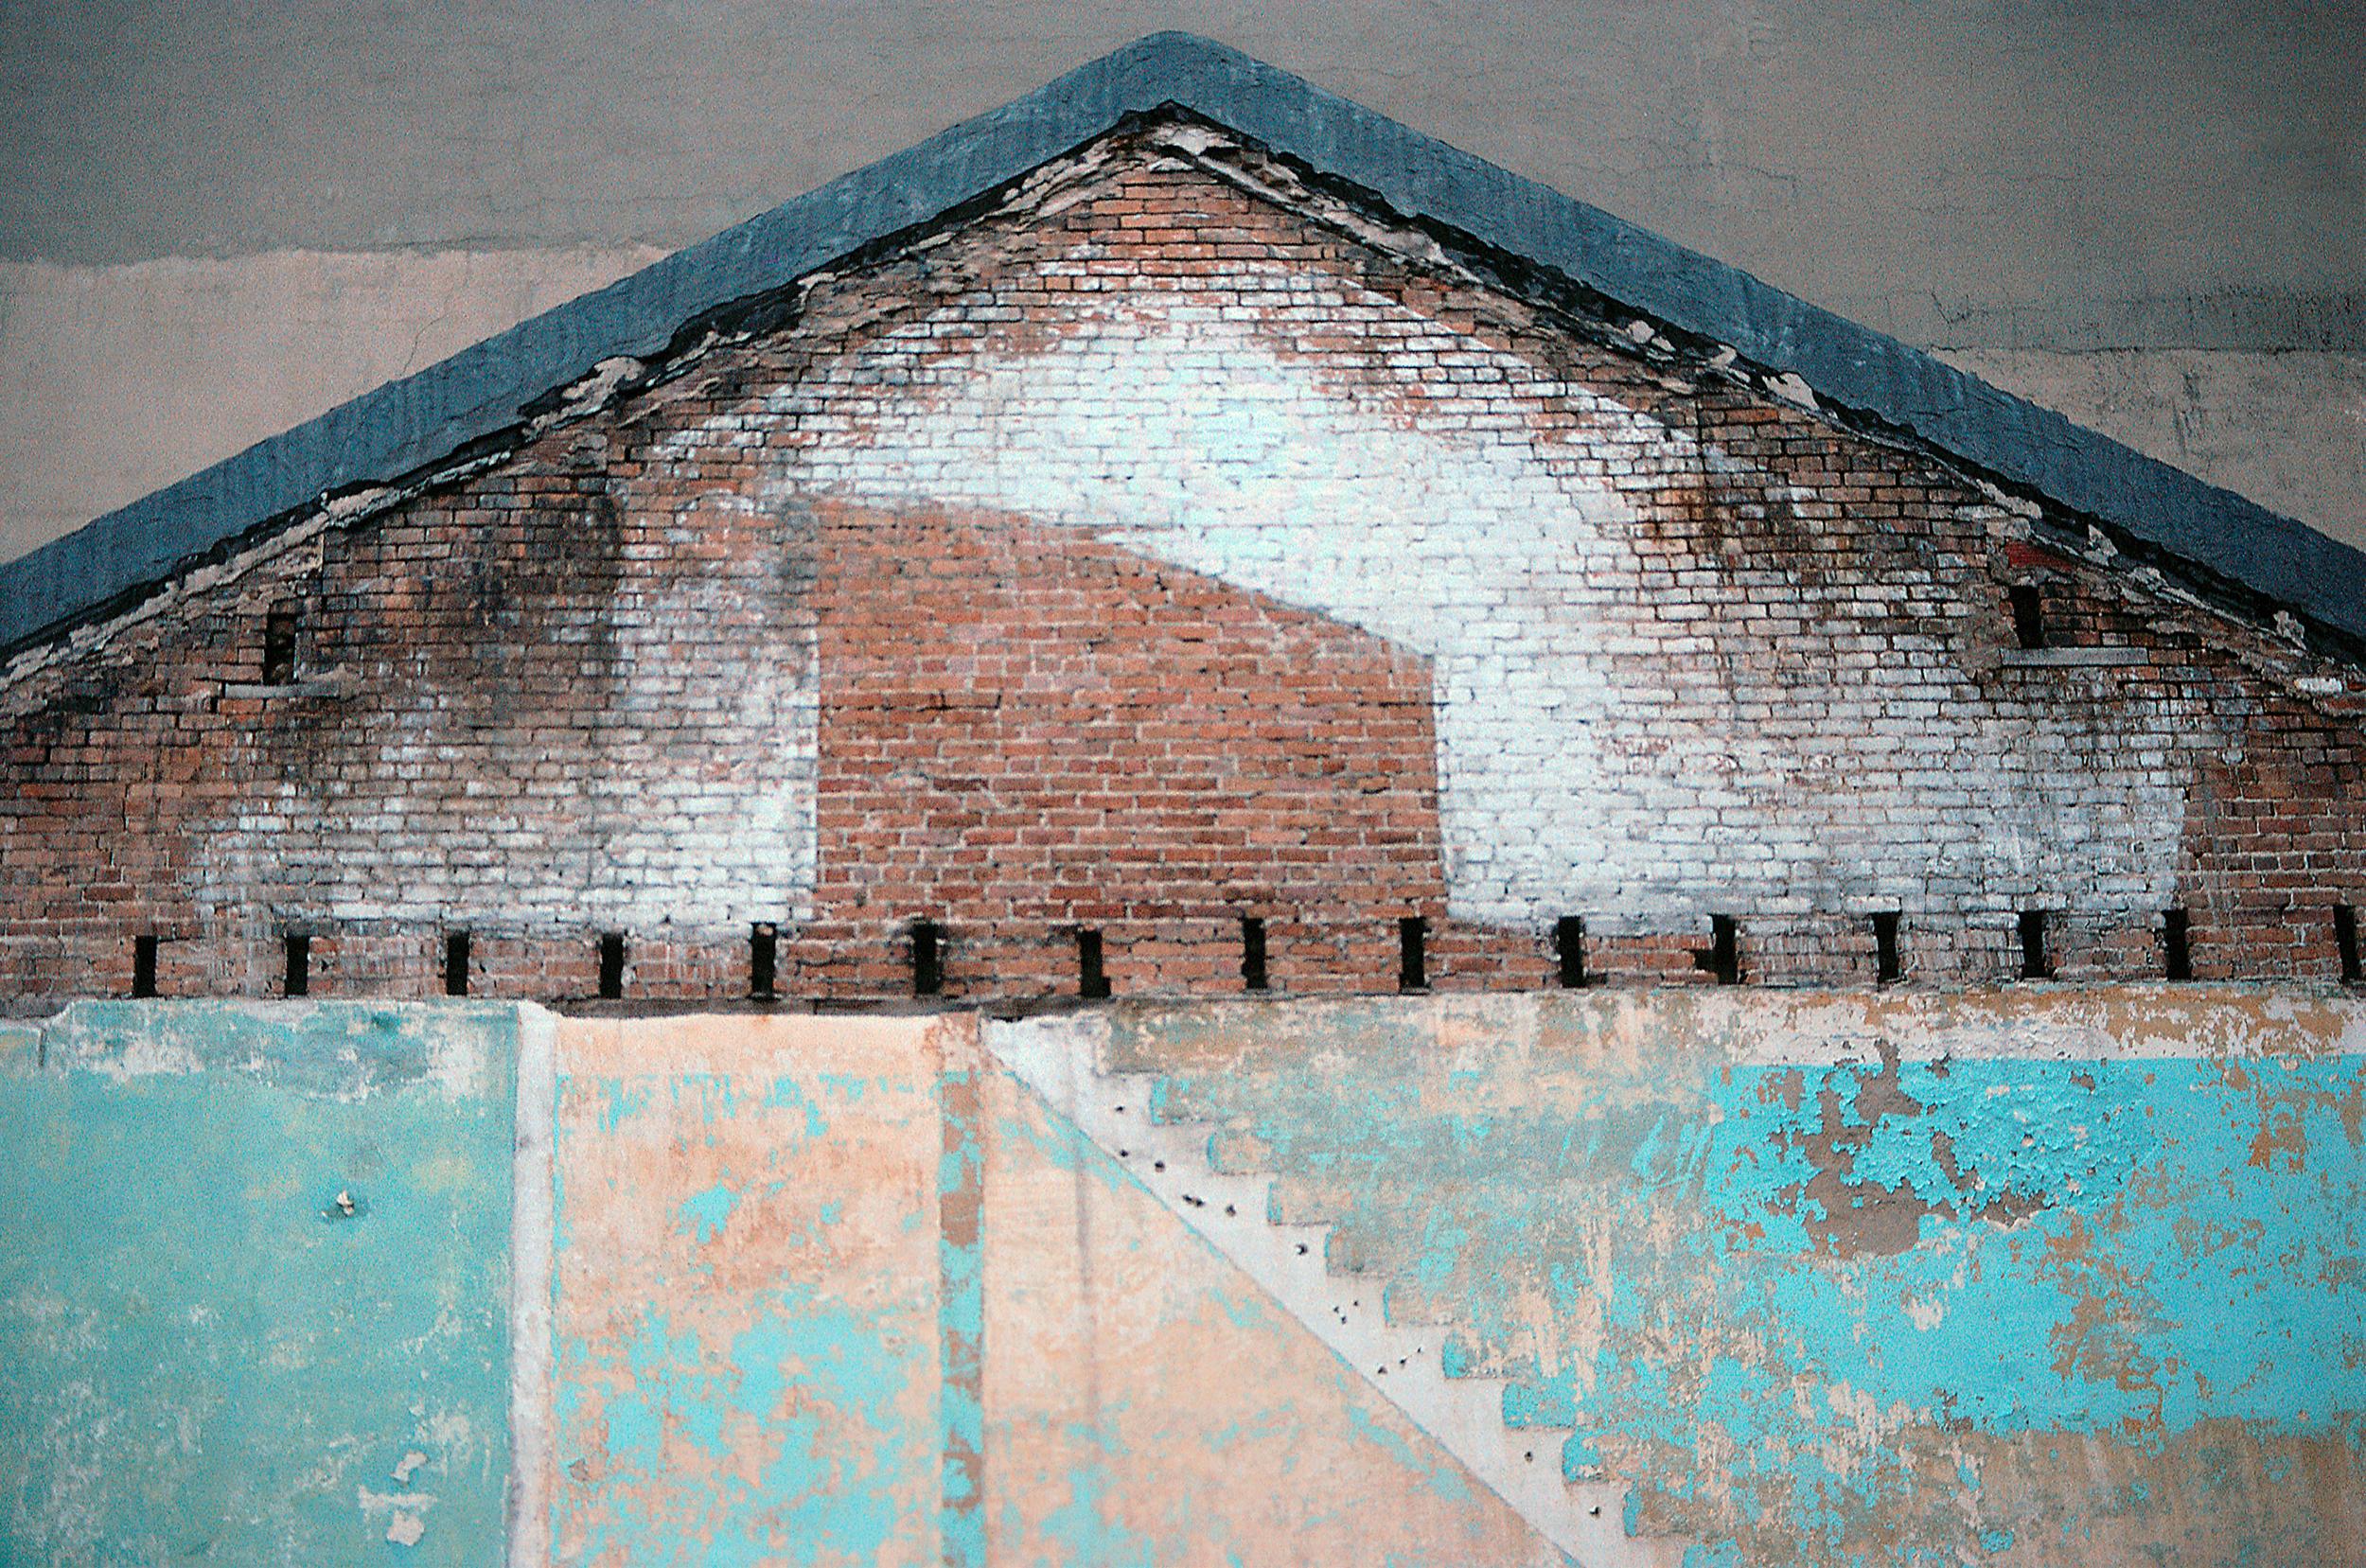 Michael K. Yamaoka  Landscape Photograph - American Contemporary Photo by M.K. Yamaoka - Facade of a Torn-Down Building